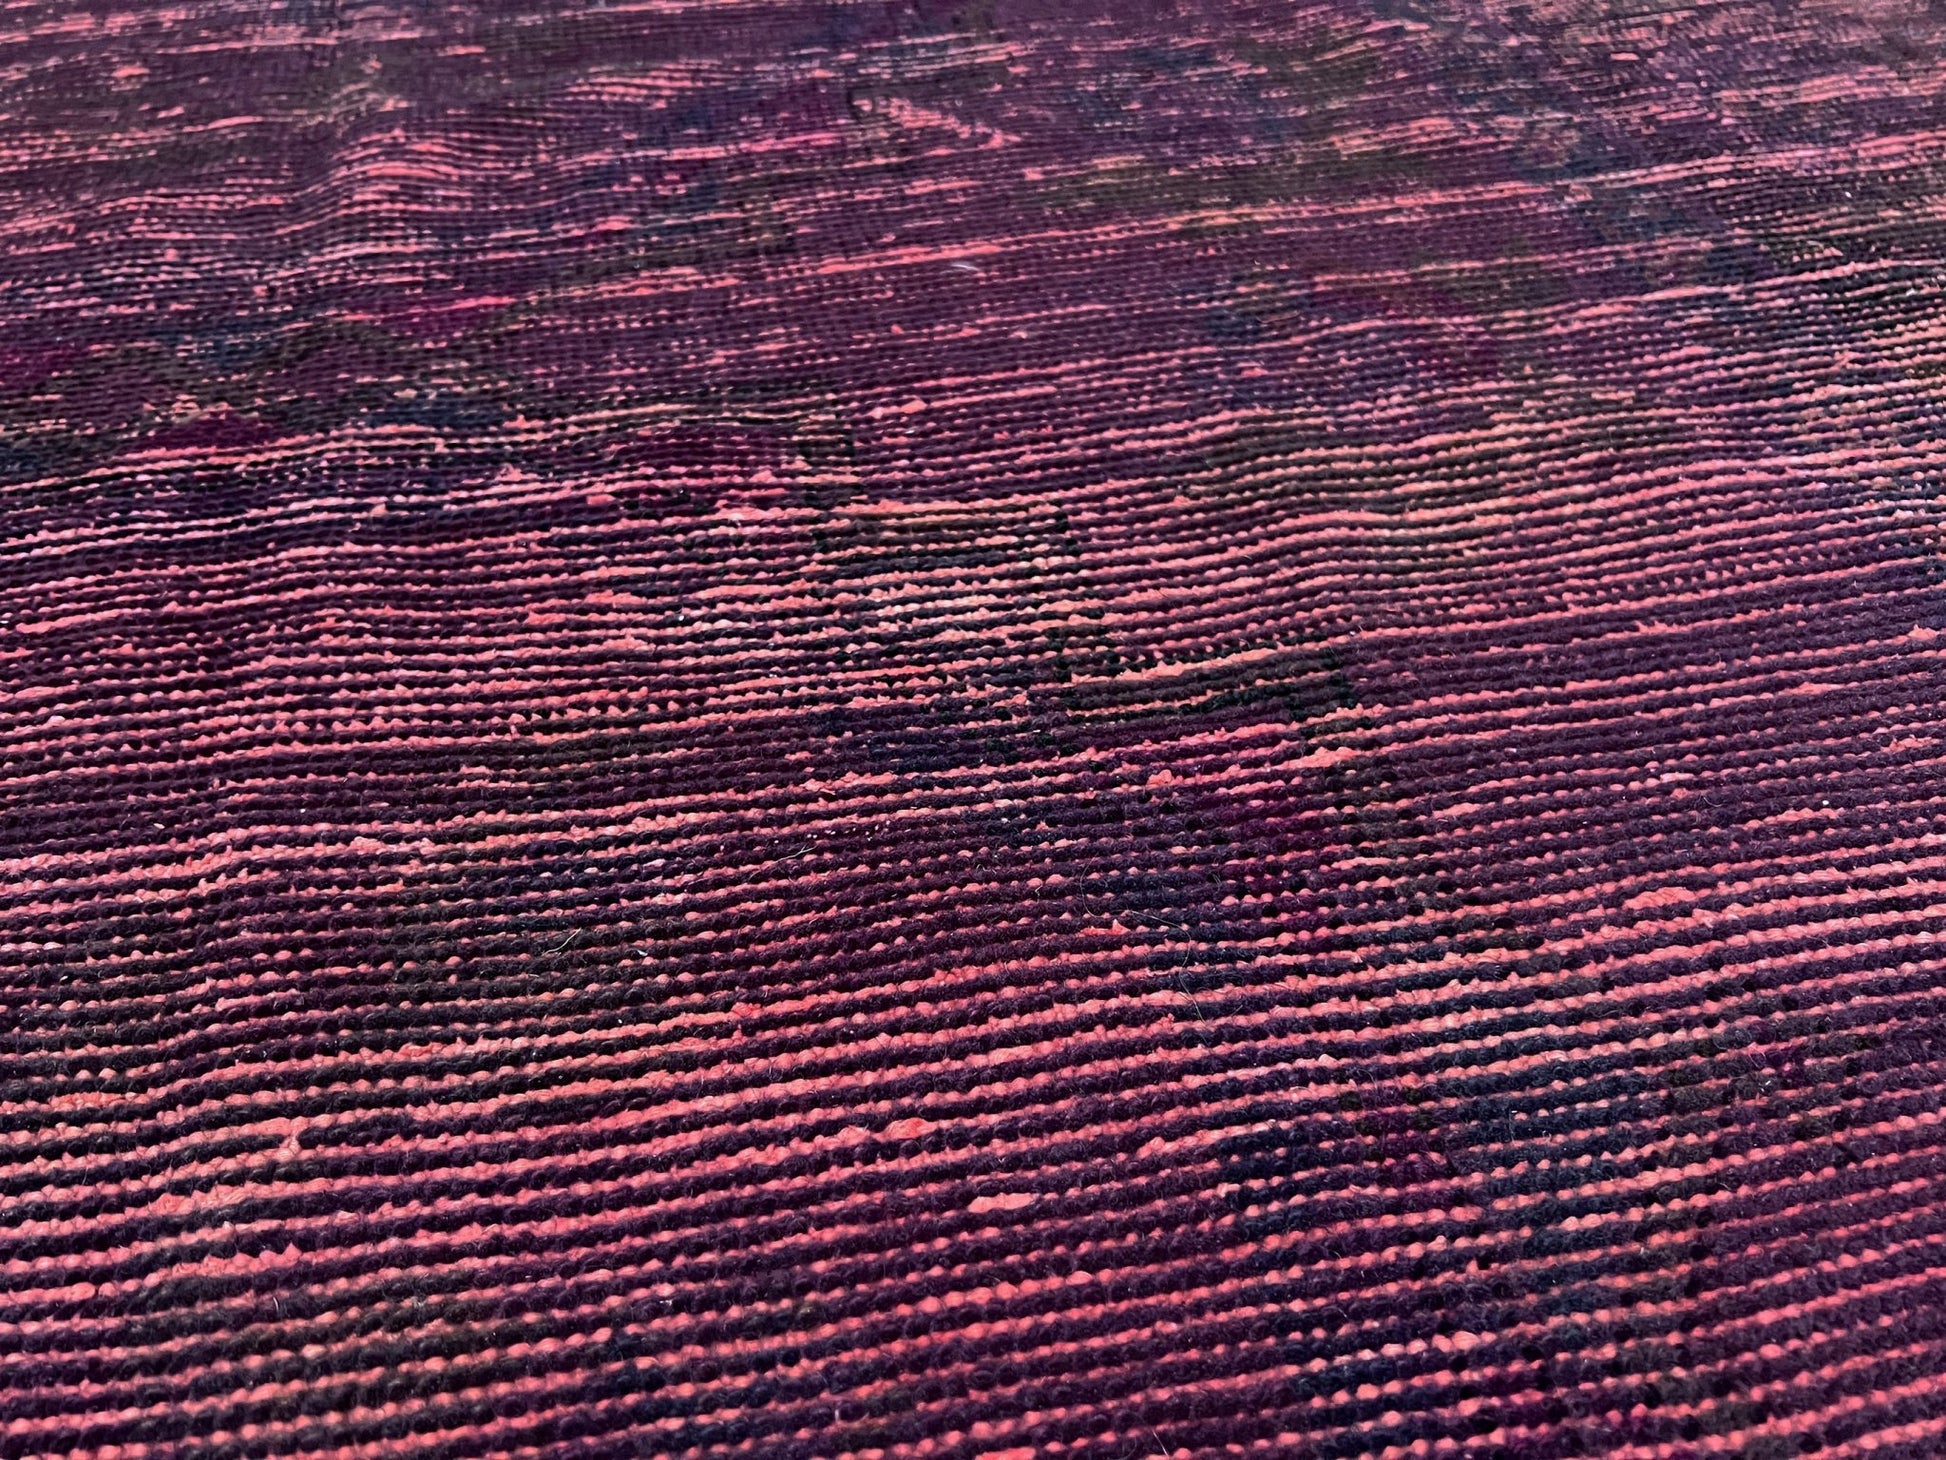 purple overdyed vintage turkish rug shop san francisco bay area